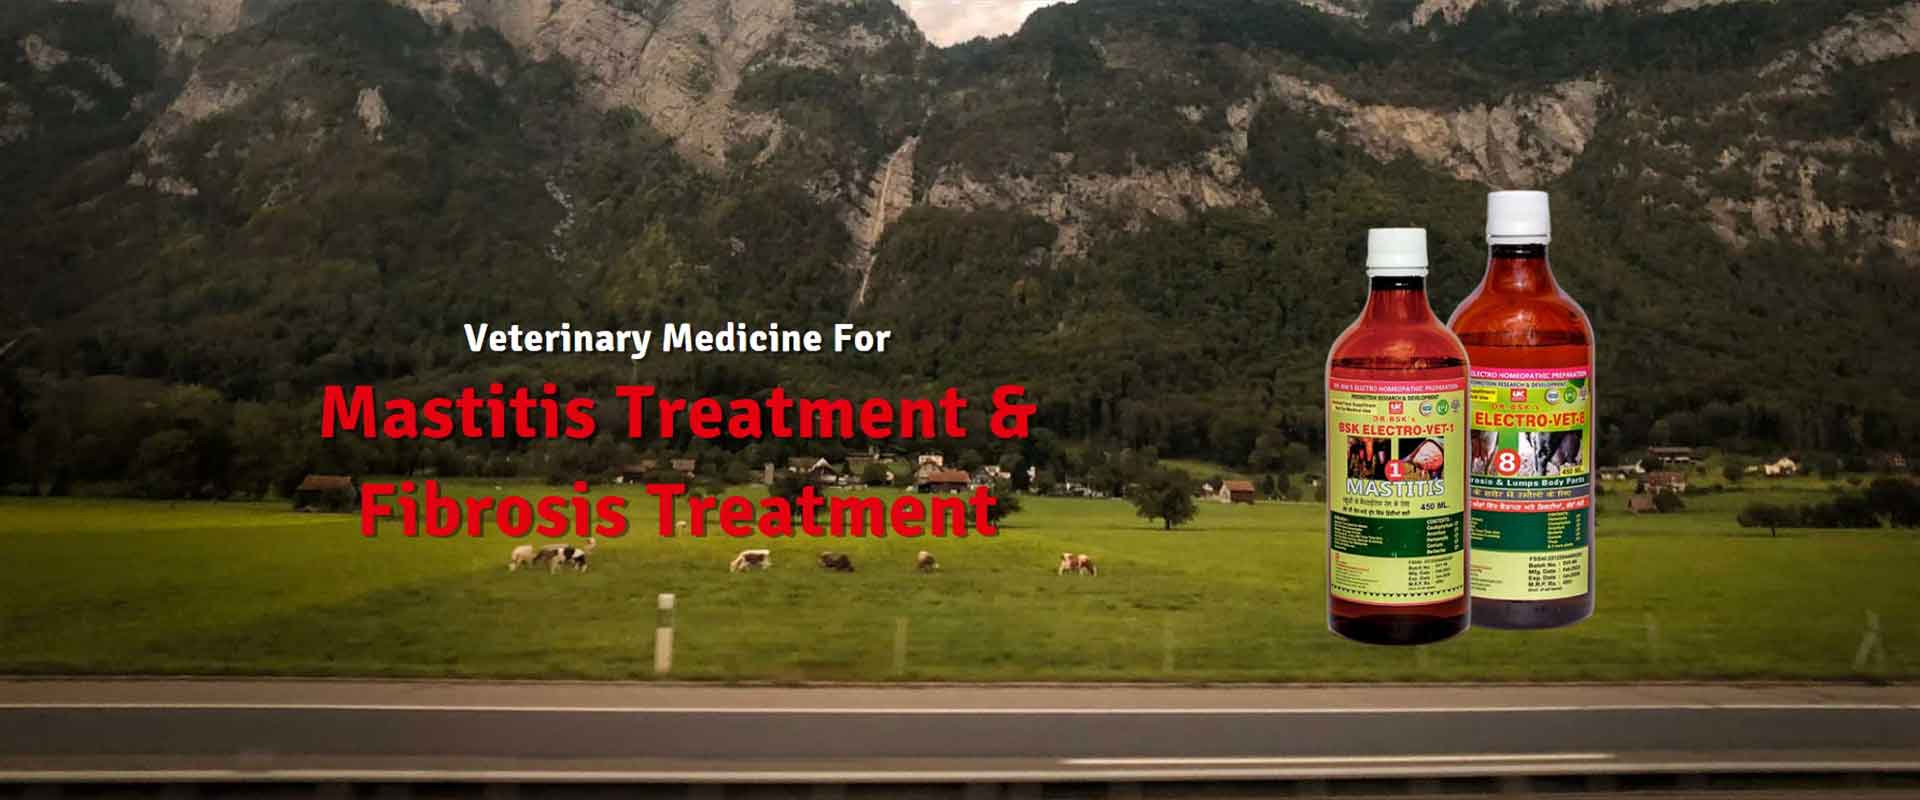 Veterinary Medicine For Mastitis Treatment and Fibrosis Treatment